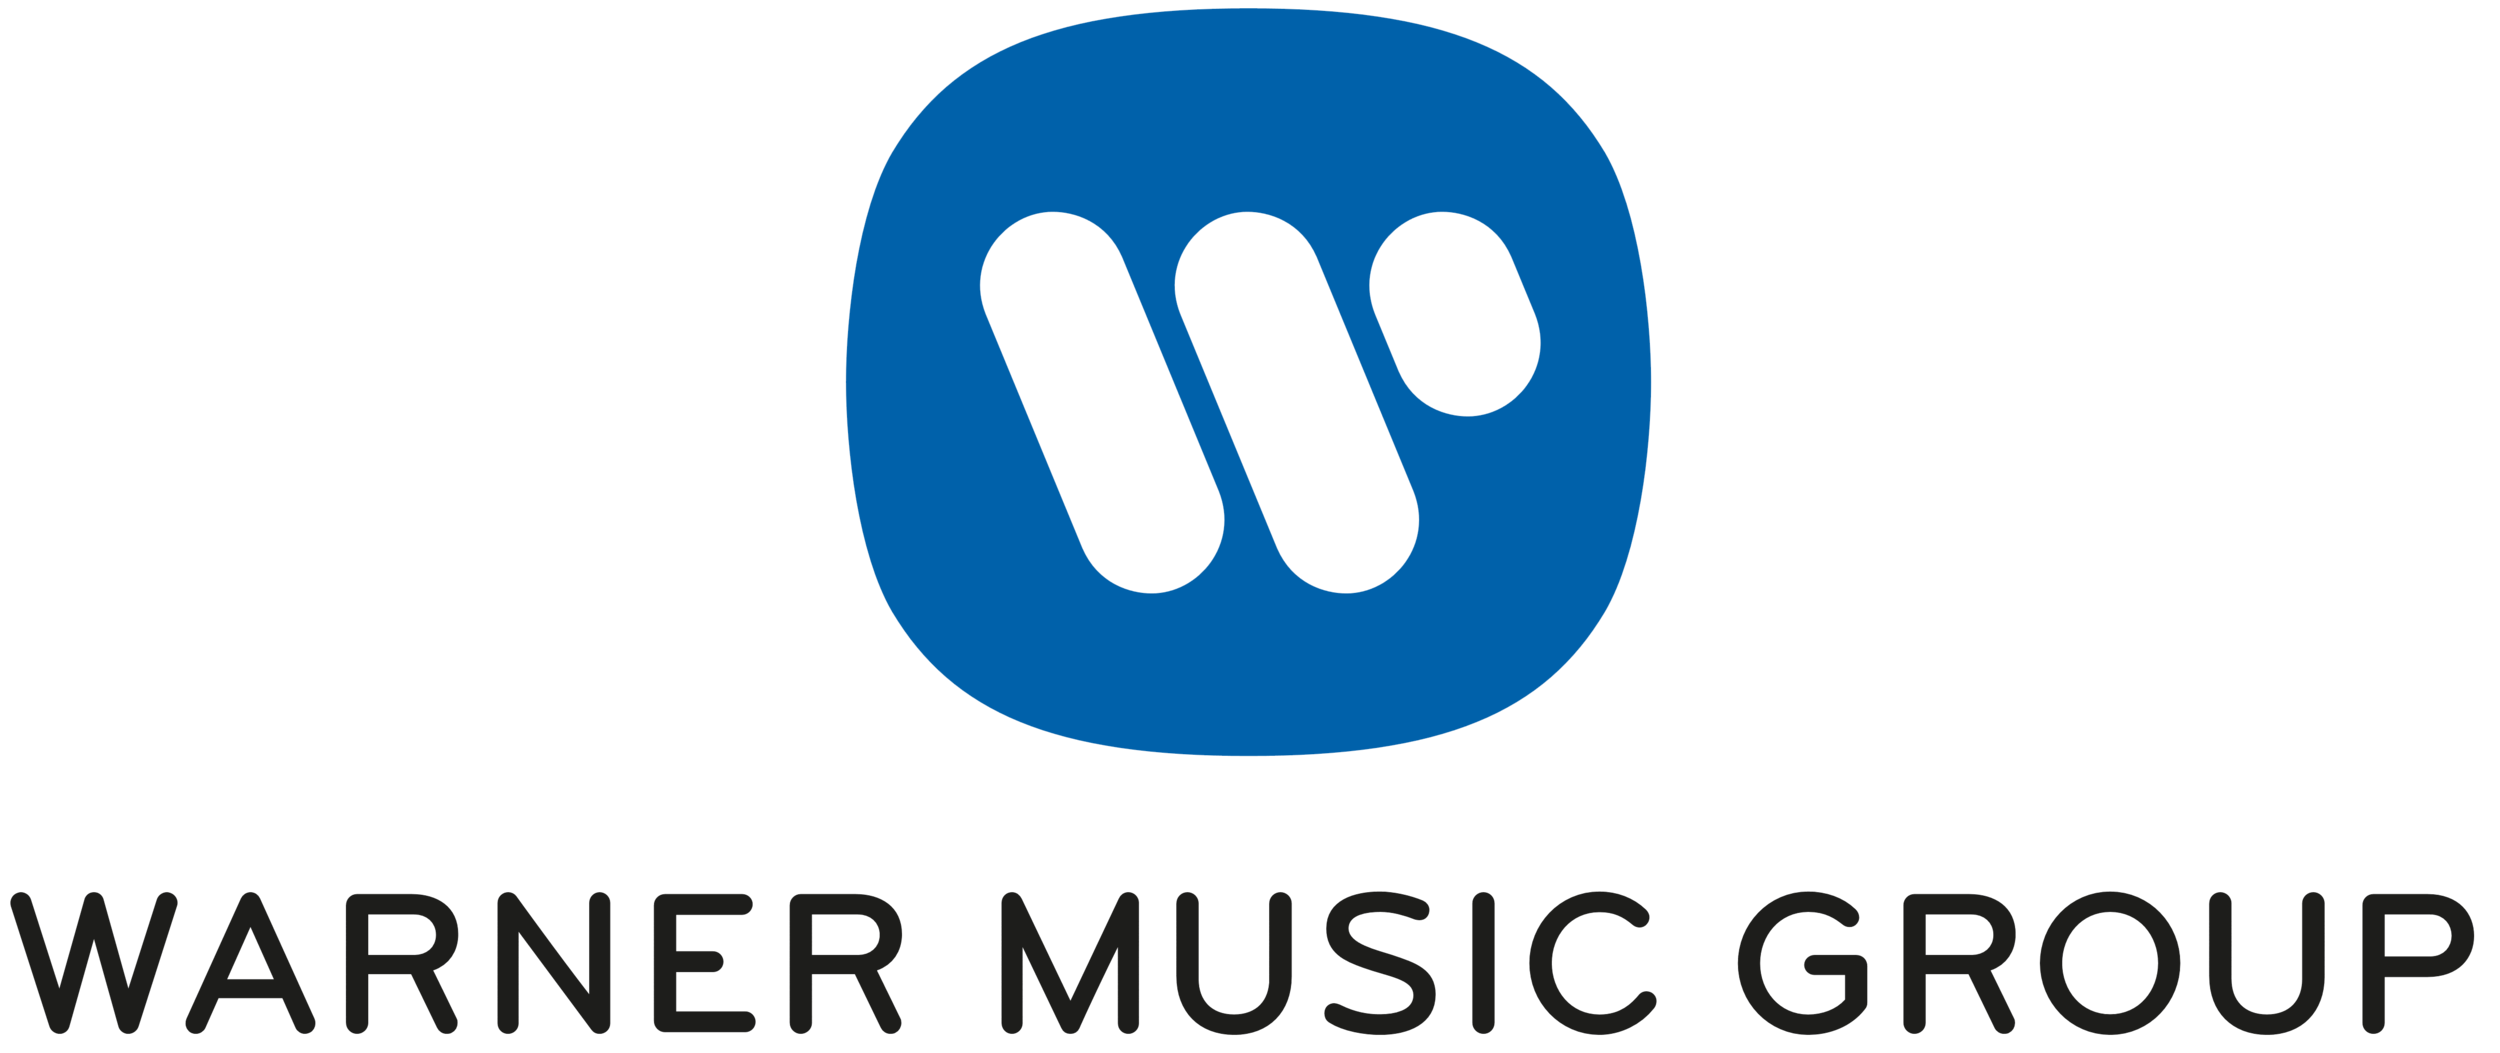 WMG_logo_Warner_Music_Group.png